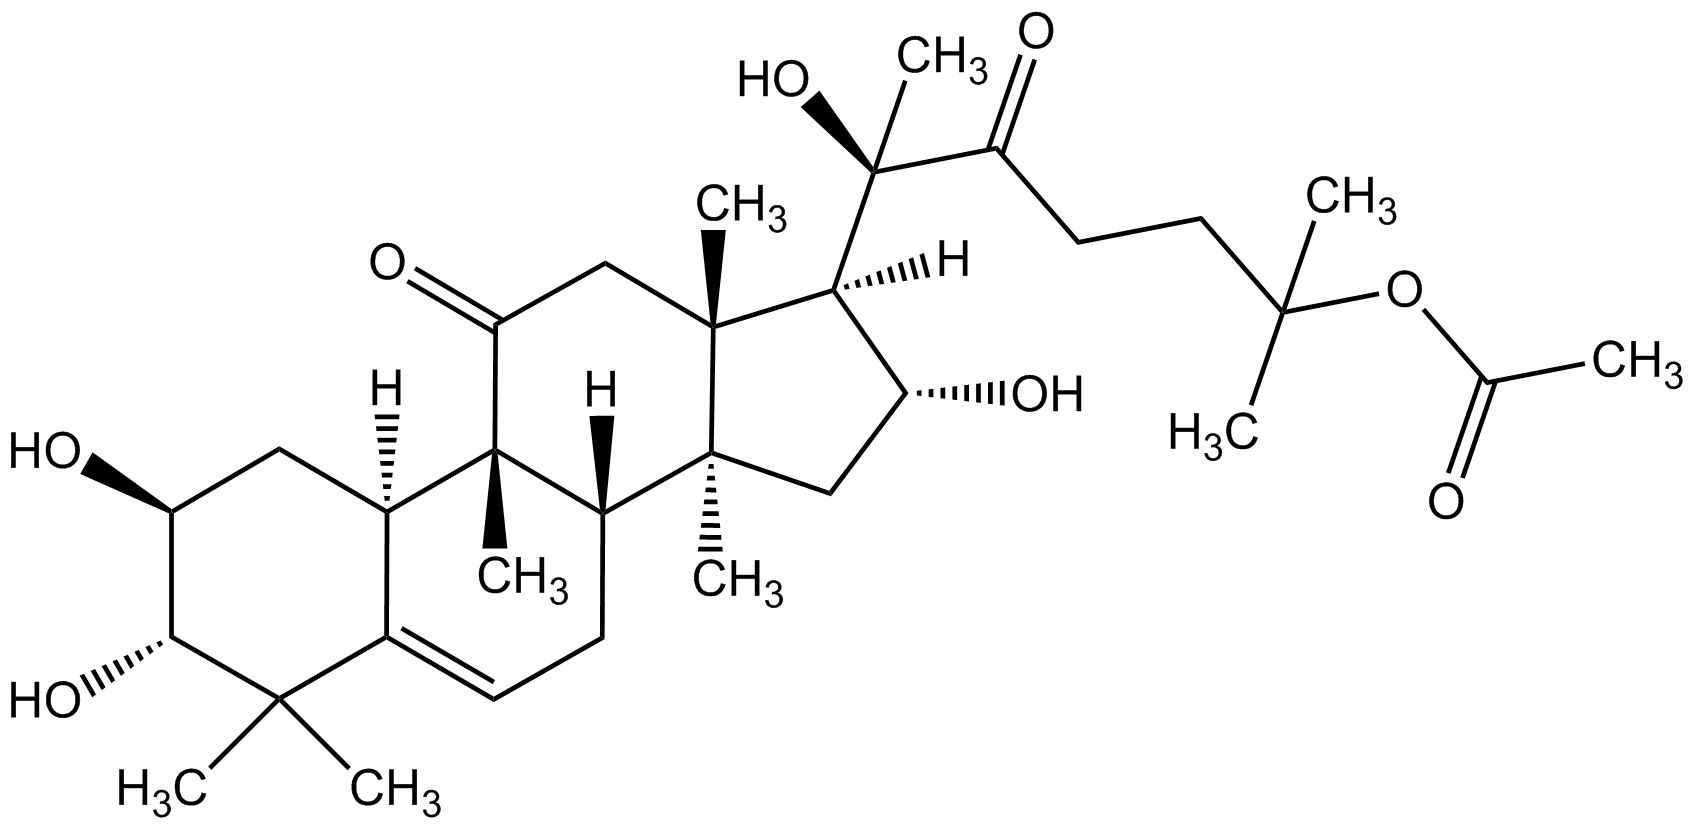 Hemslecin A phyproof® Reference Substance | PhytoLab